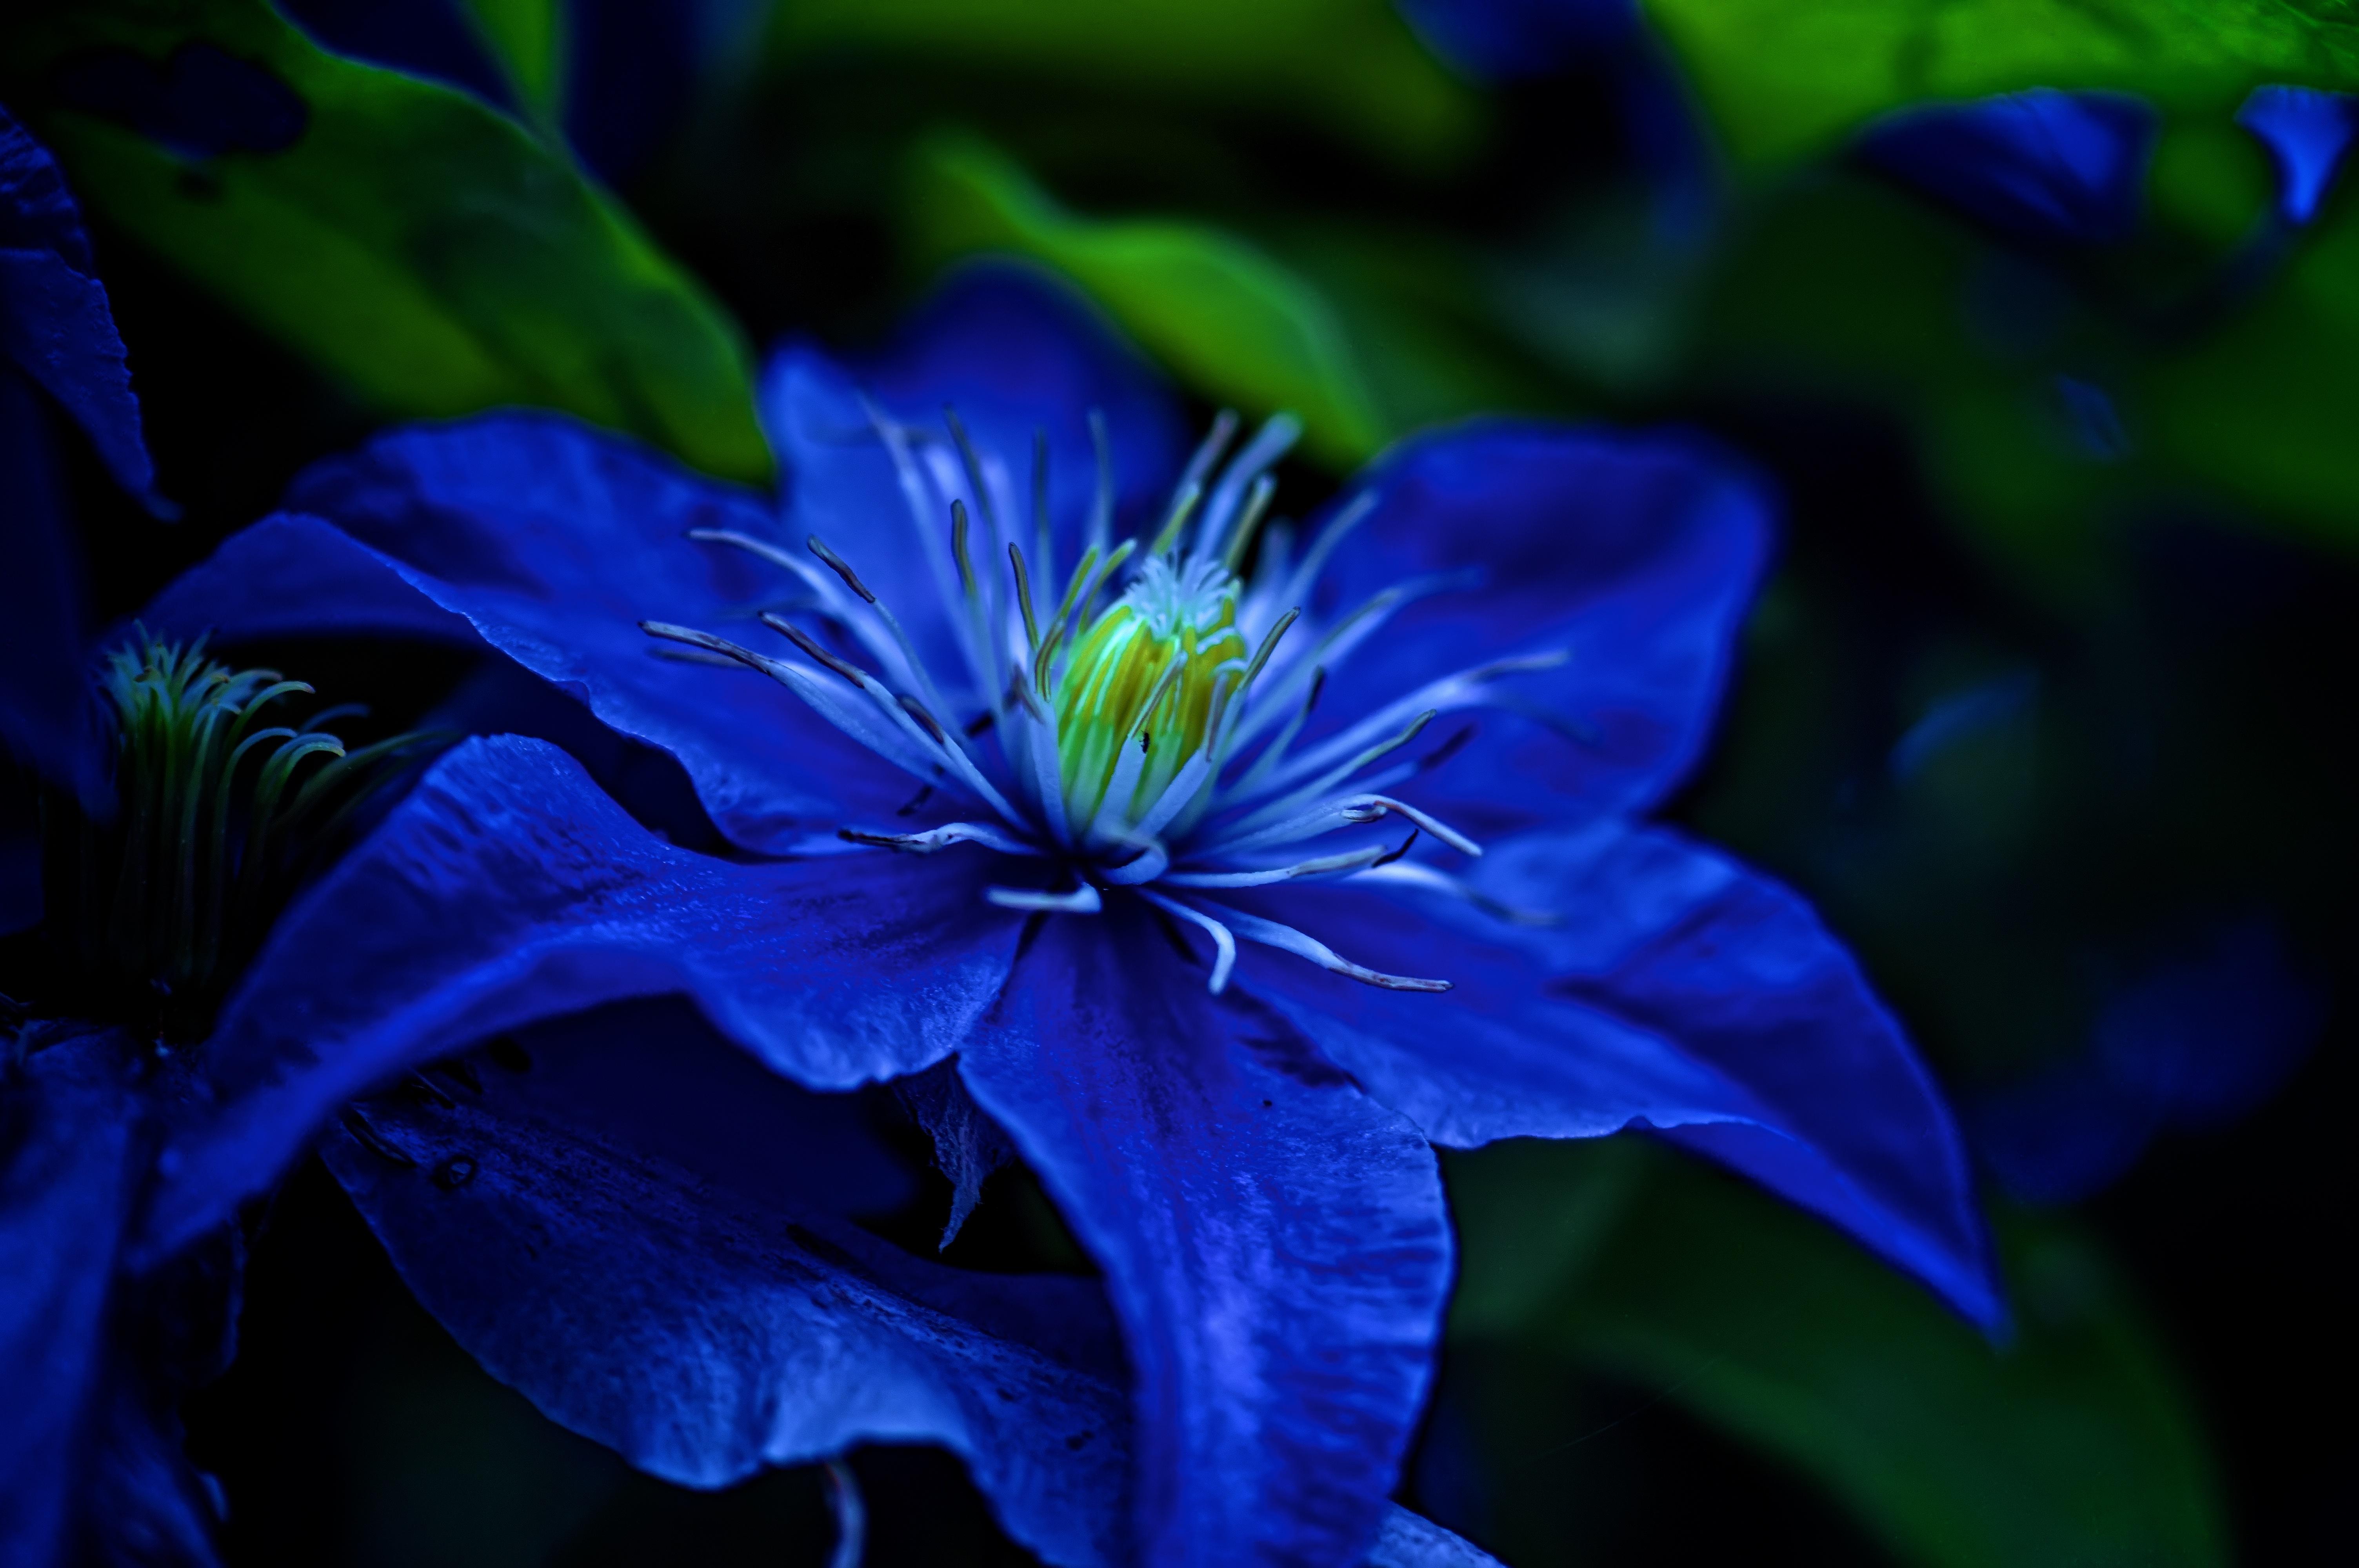 6016 x 4000 · jpeg - Blue Flower 5k Retina Ultra HD Wallpaper | Background Image | 6016x4000 ...